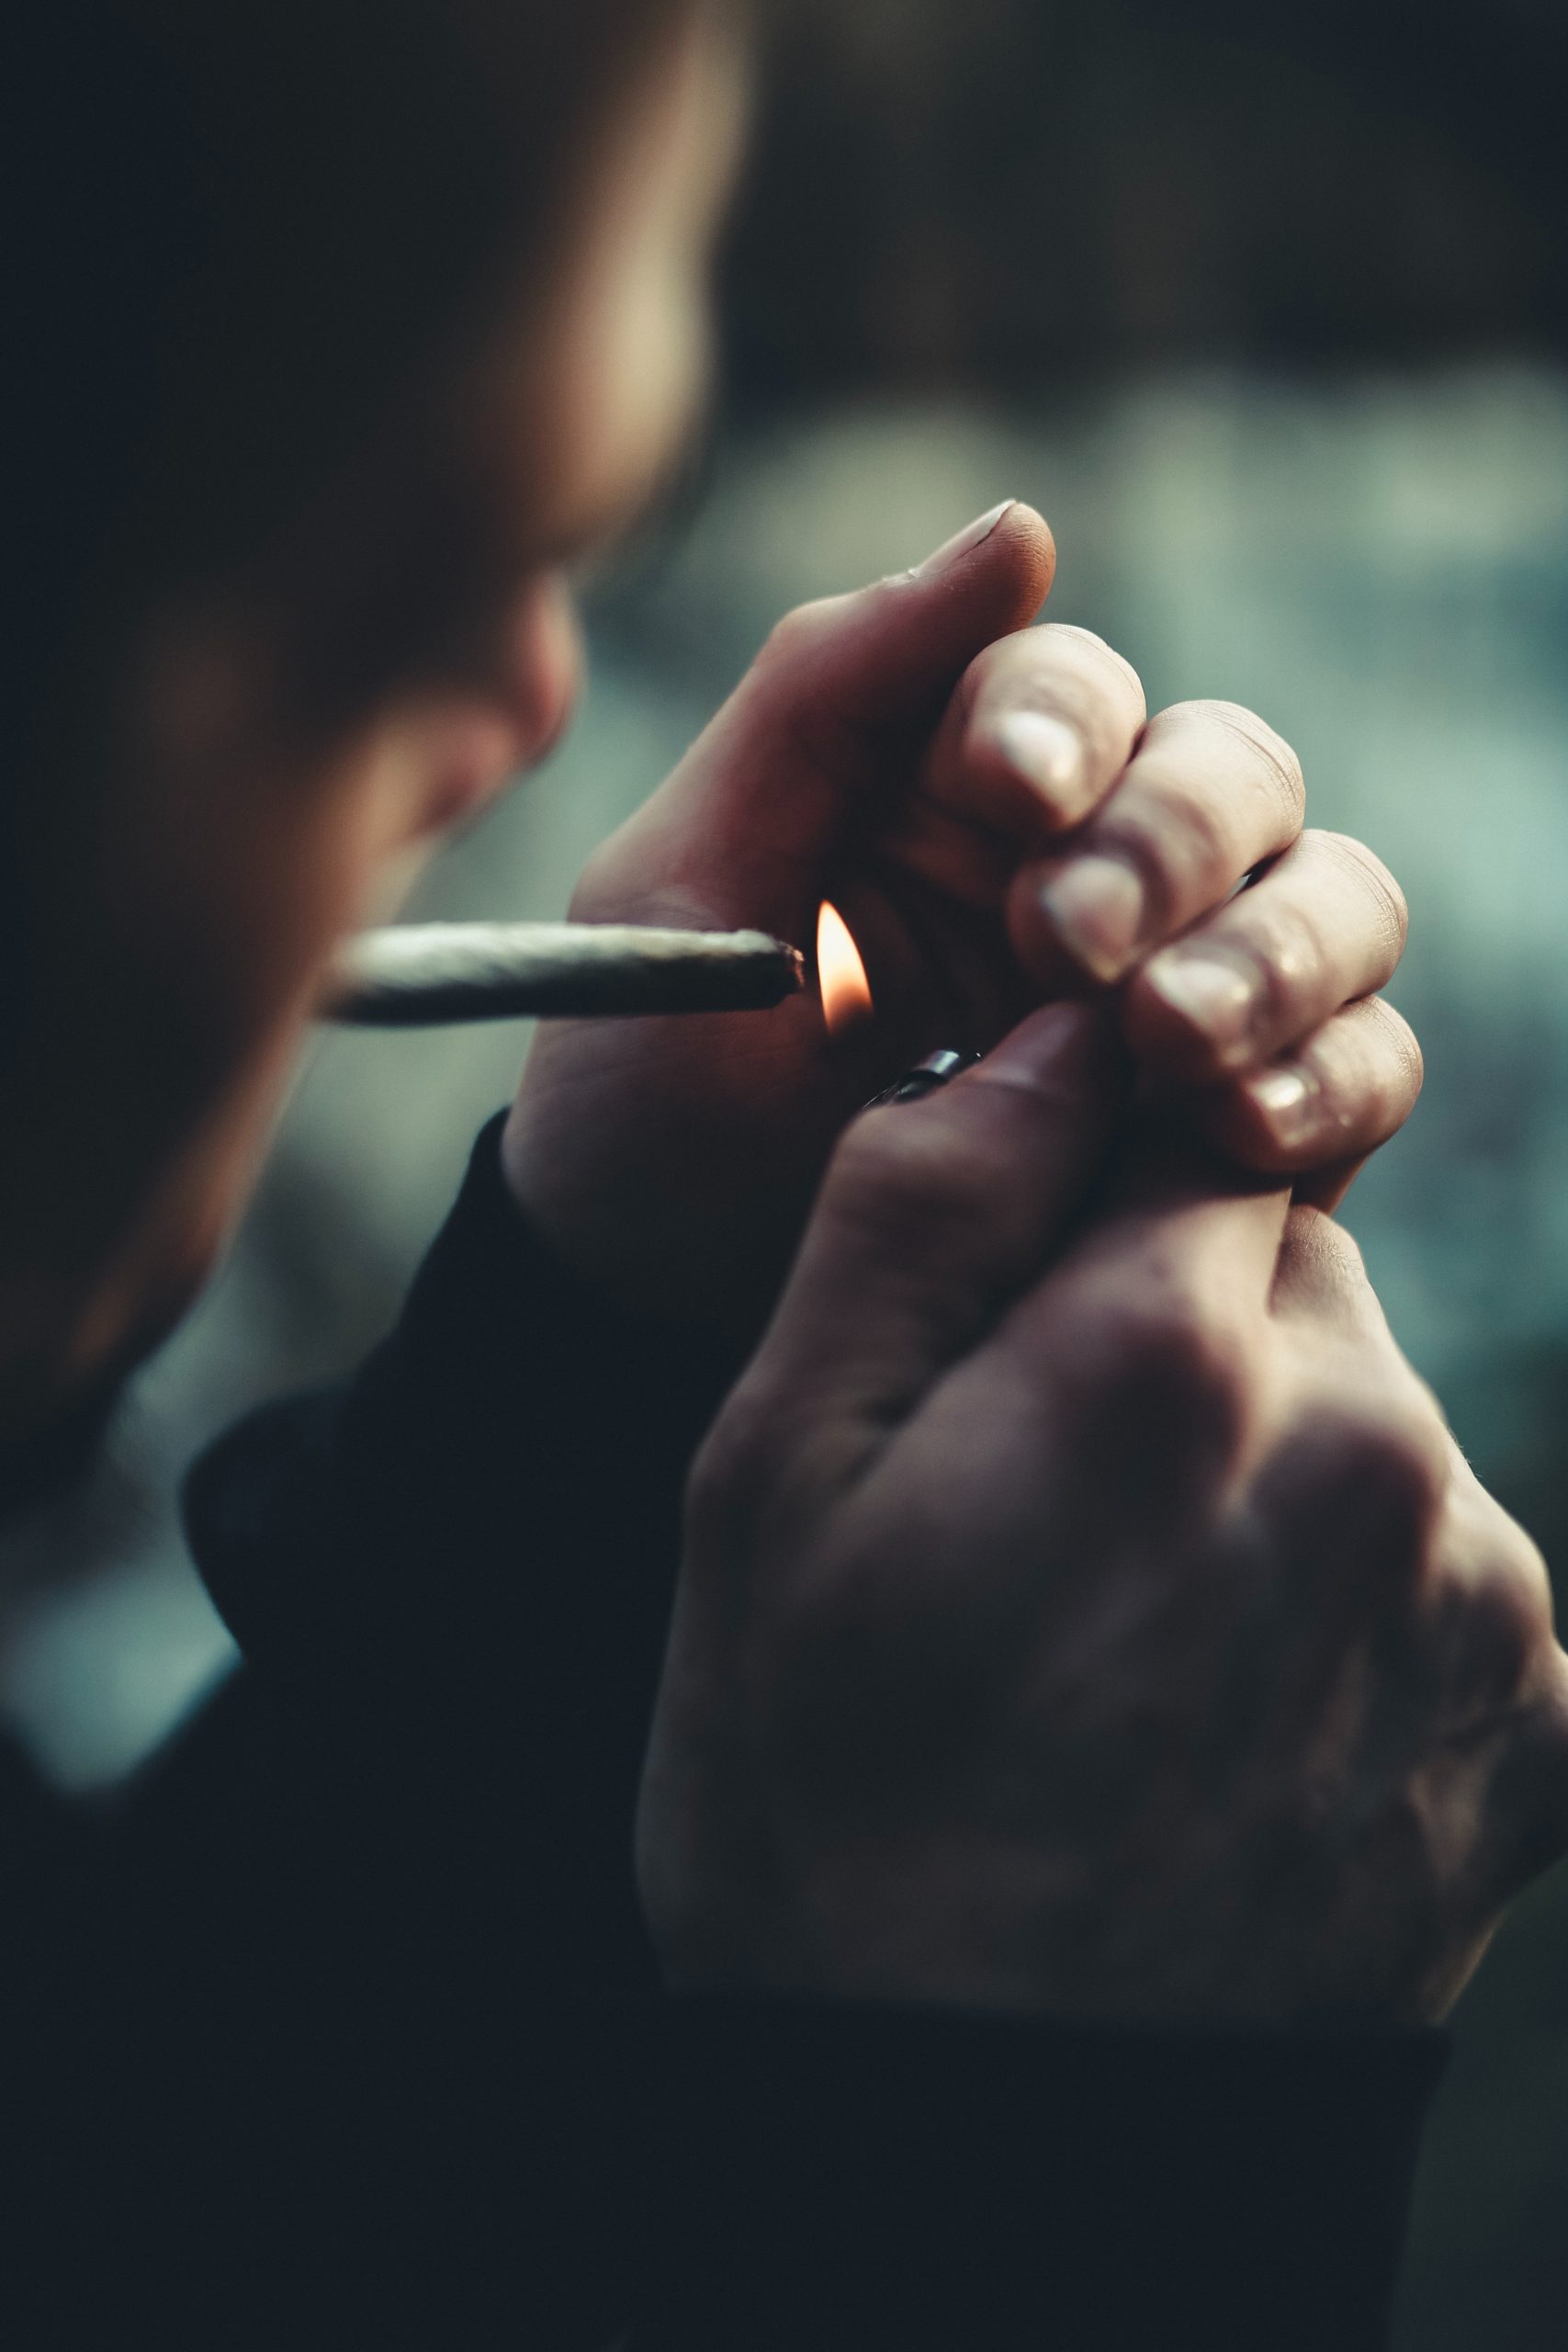 A man lighting a joint